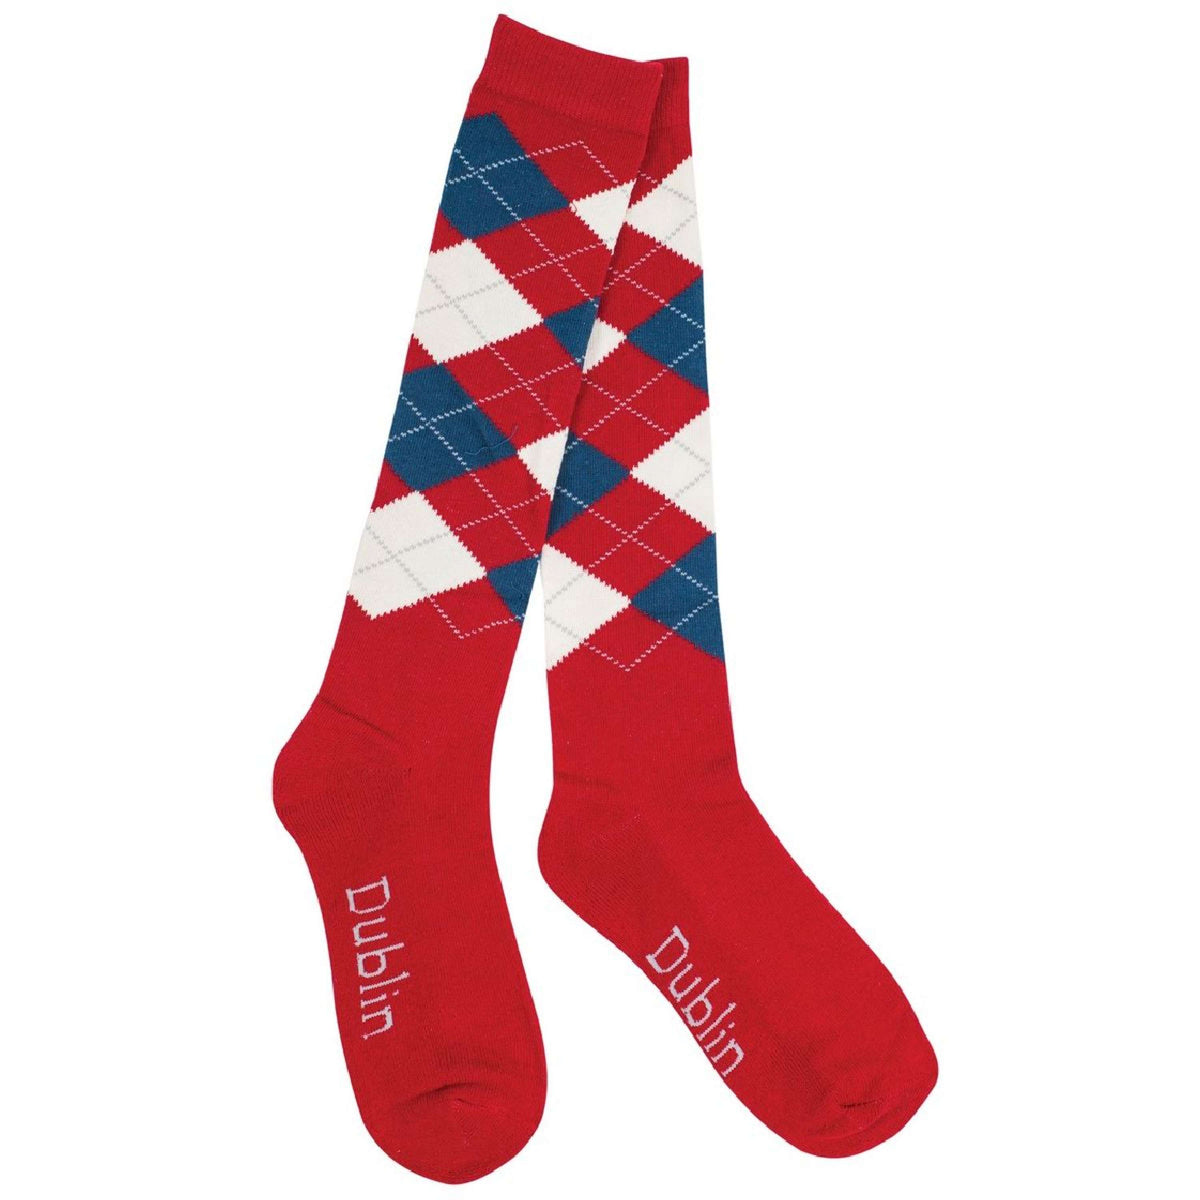 Dublin Socken Argyle Rot/Navy/Weiß